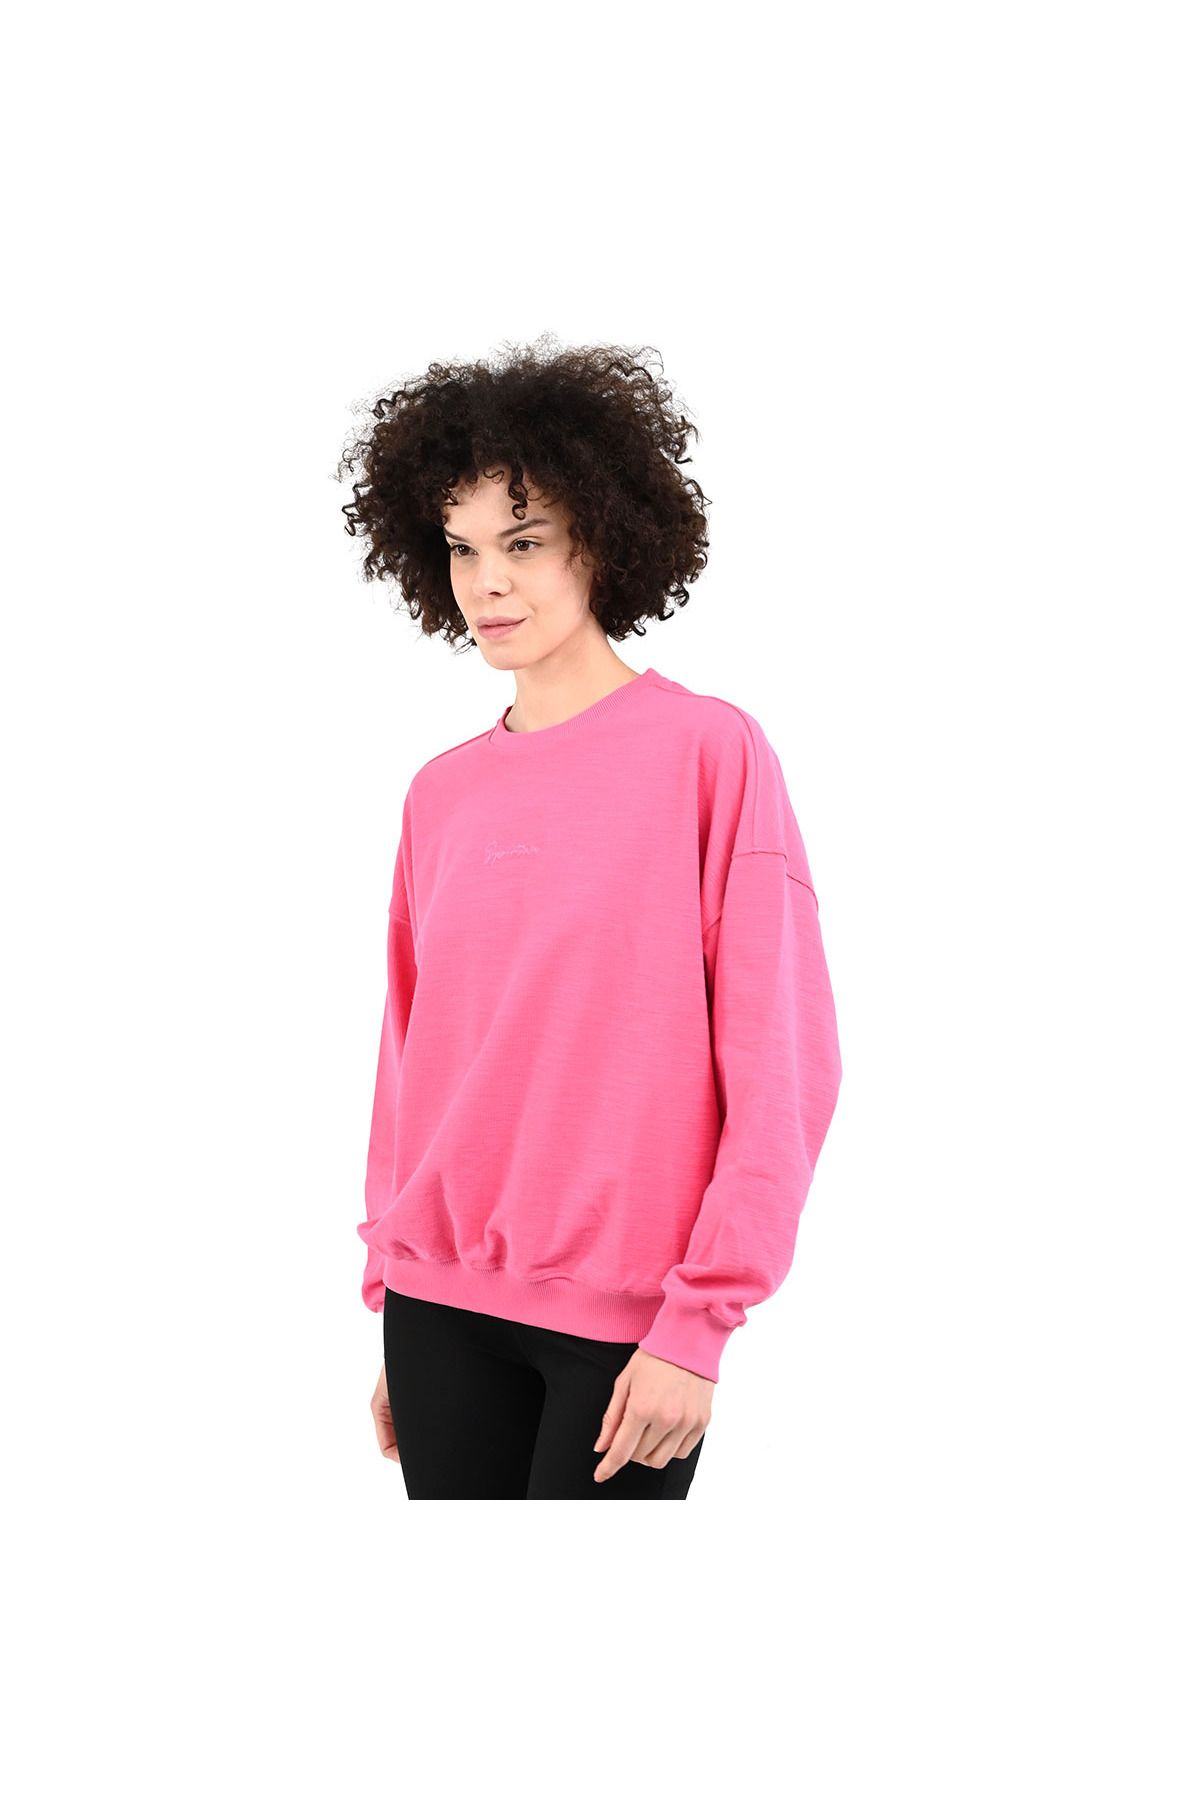 Sportive Luna Kadın Pembe Günlük Stil Sweatshirt 24yktl13d22-pmb